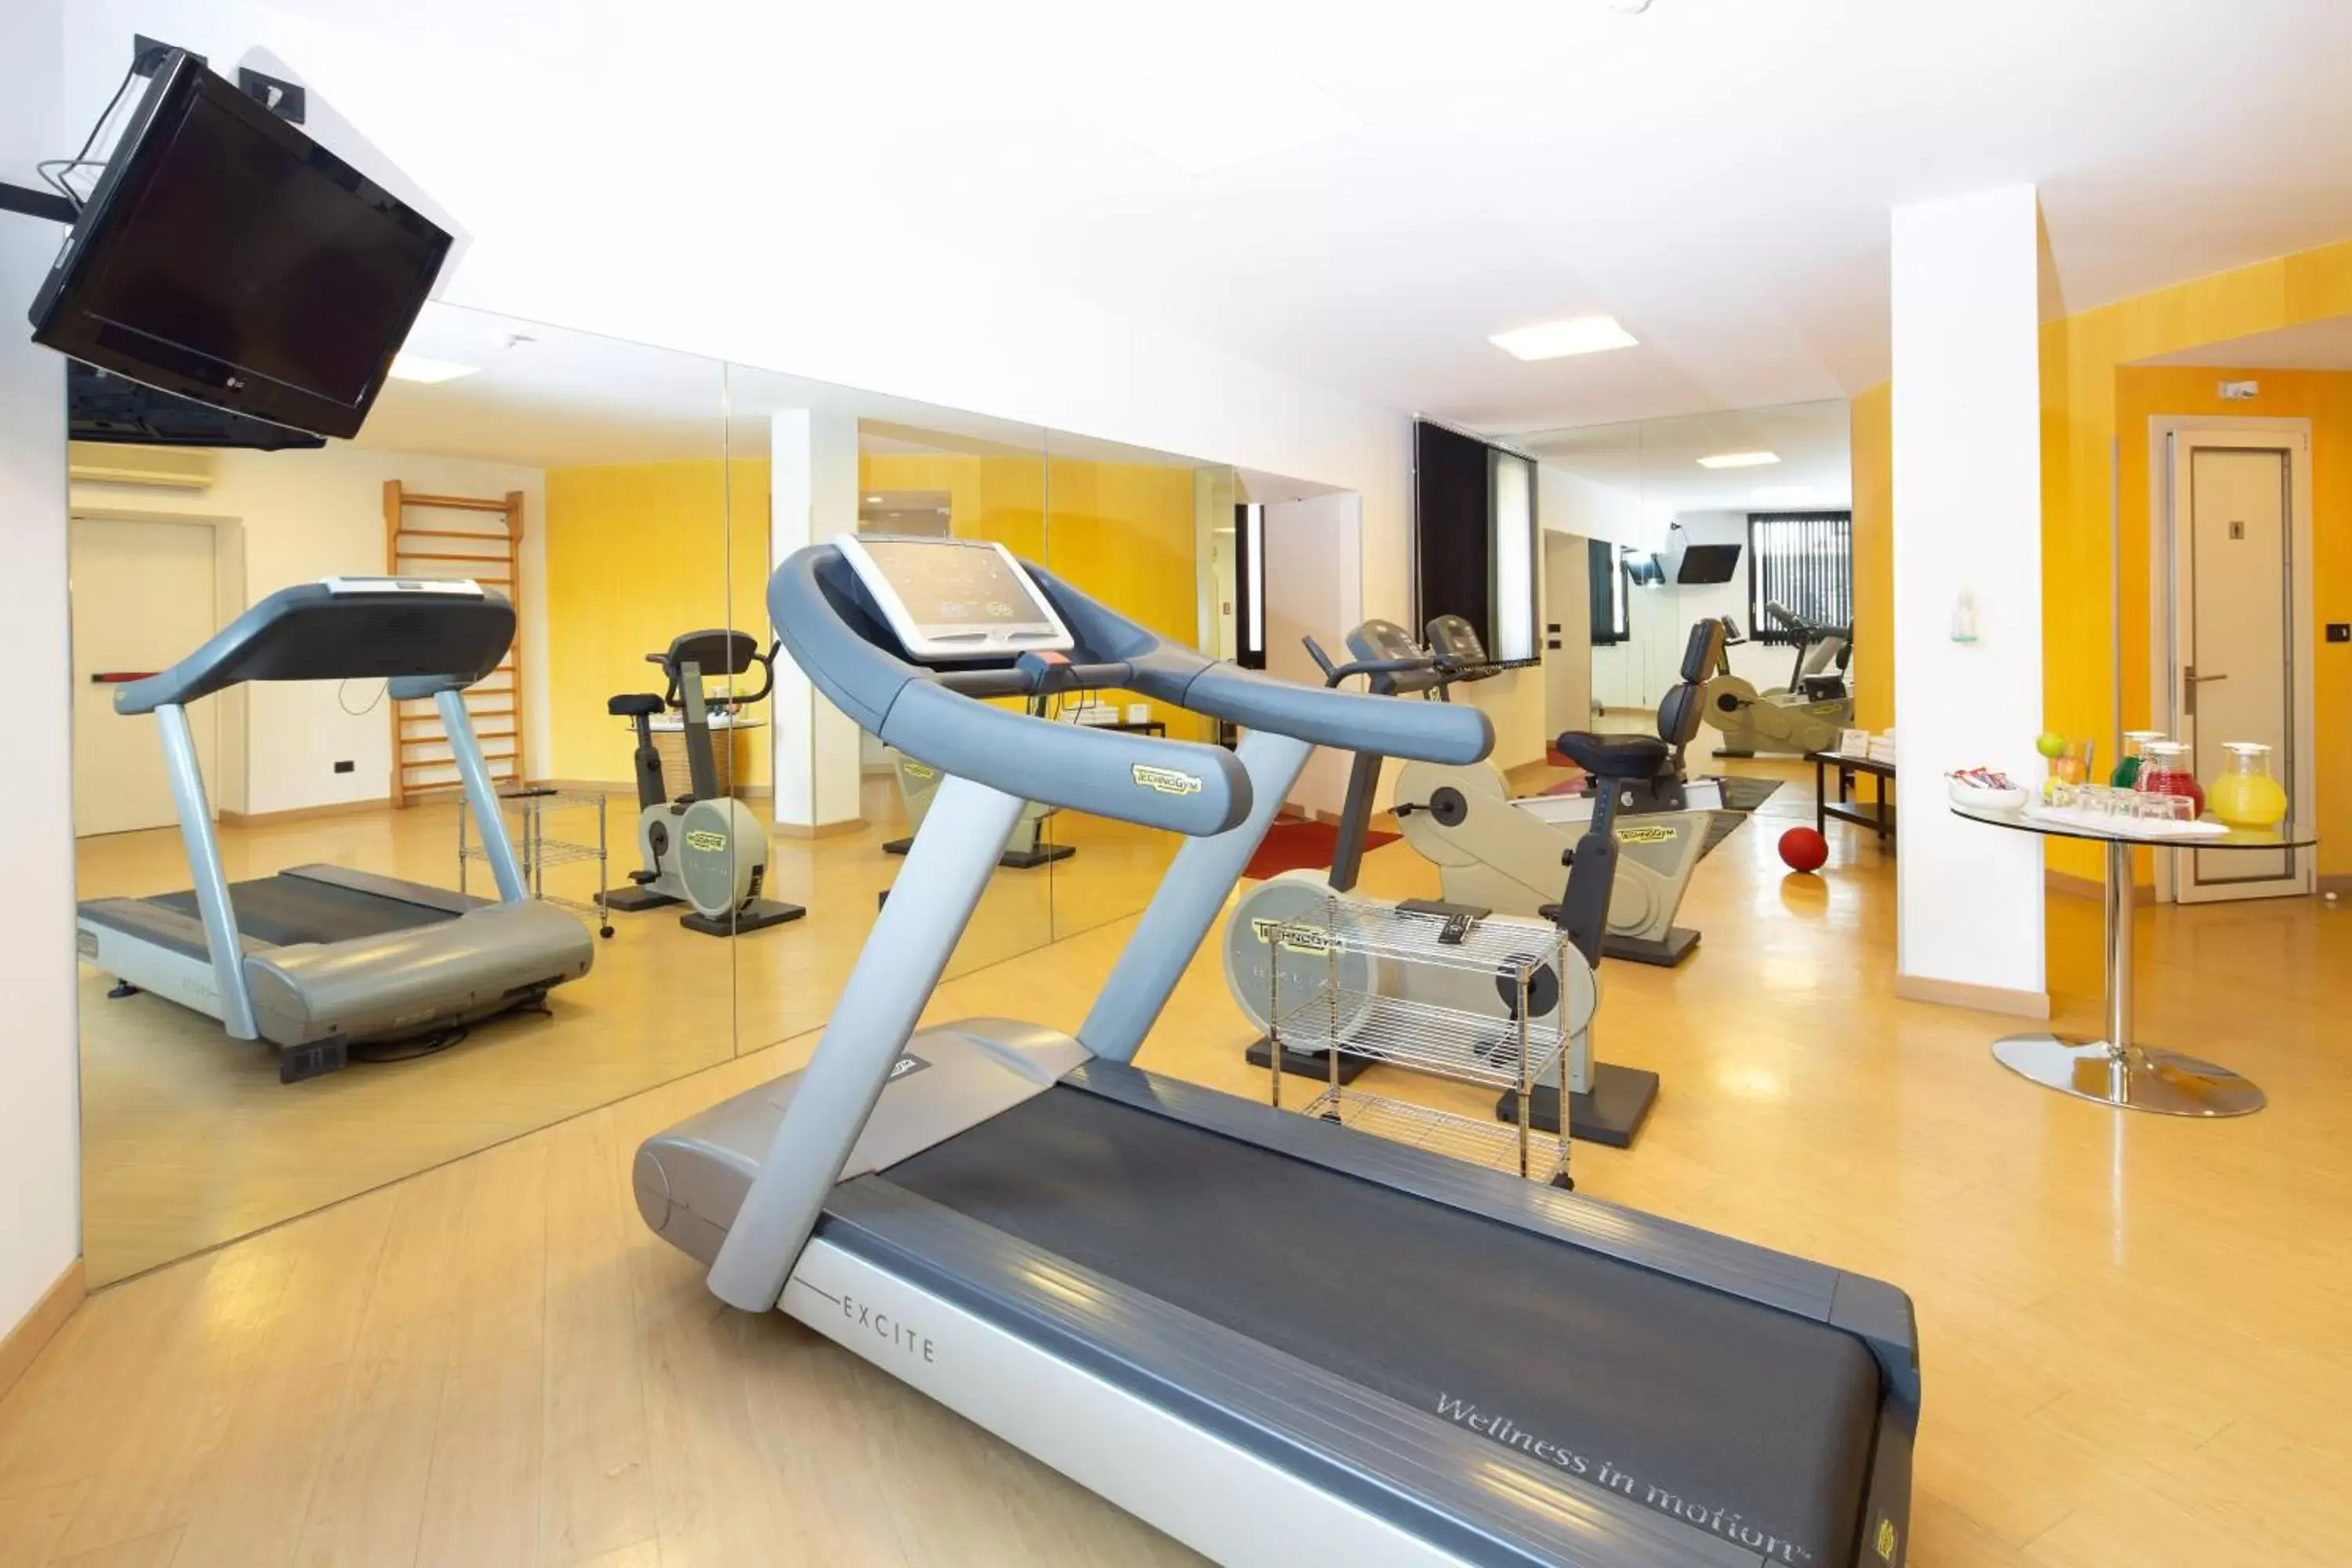 Fitness centre/facilities, Fitness Center/Facilities in Best Western Hotel Biri